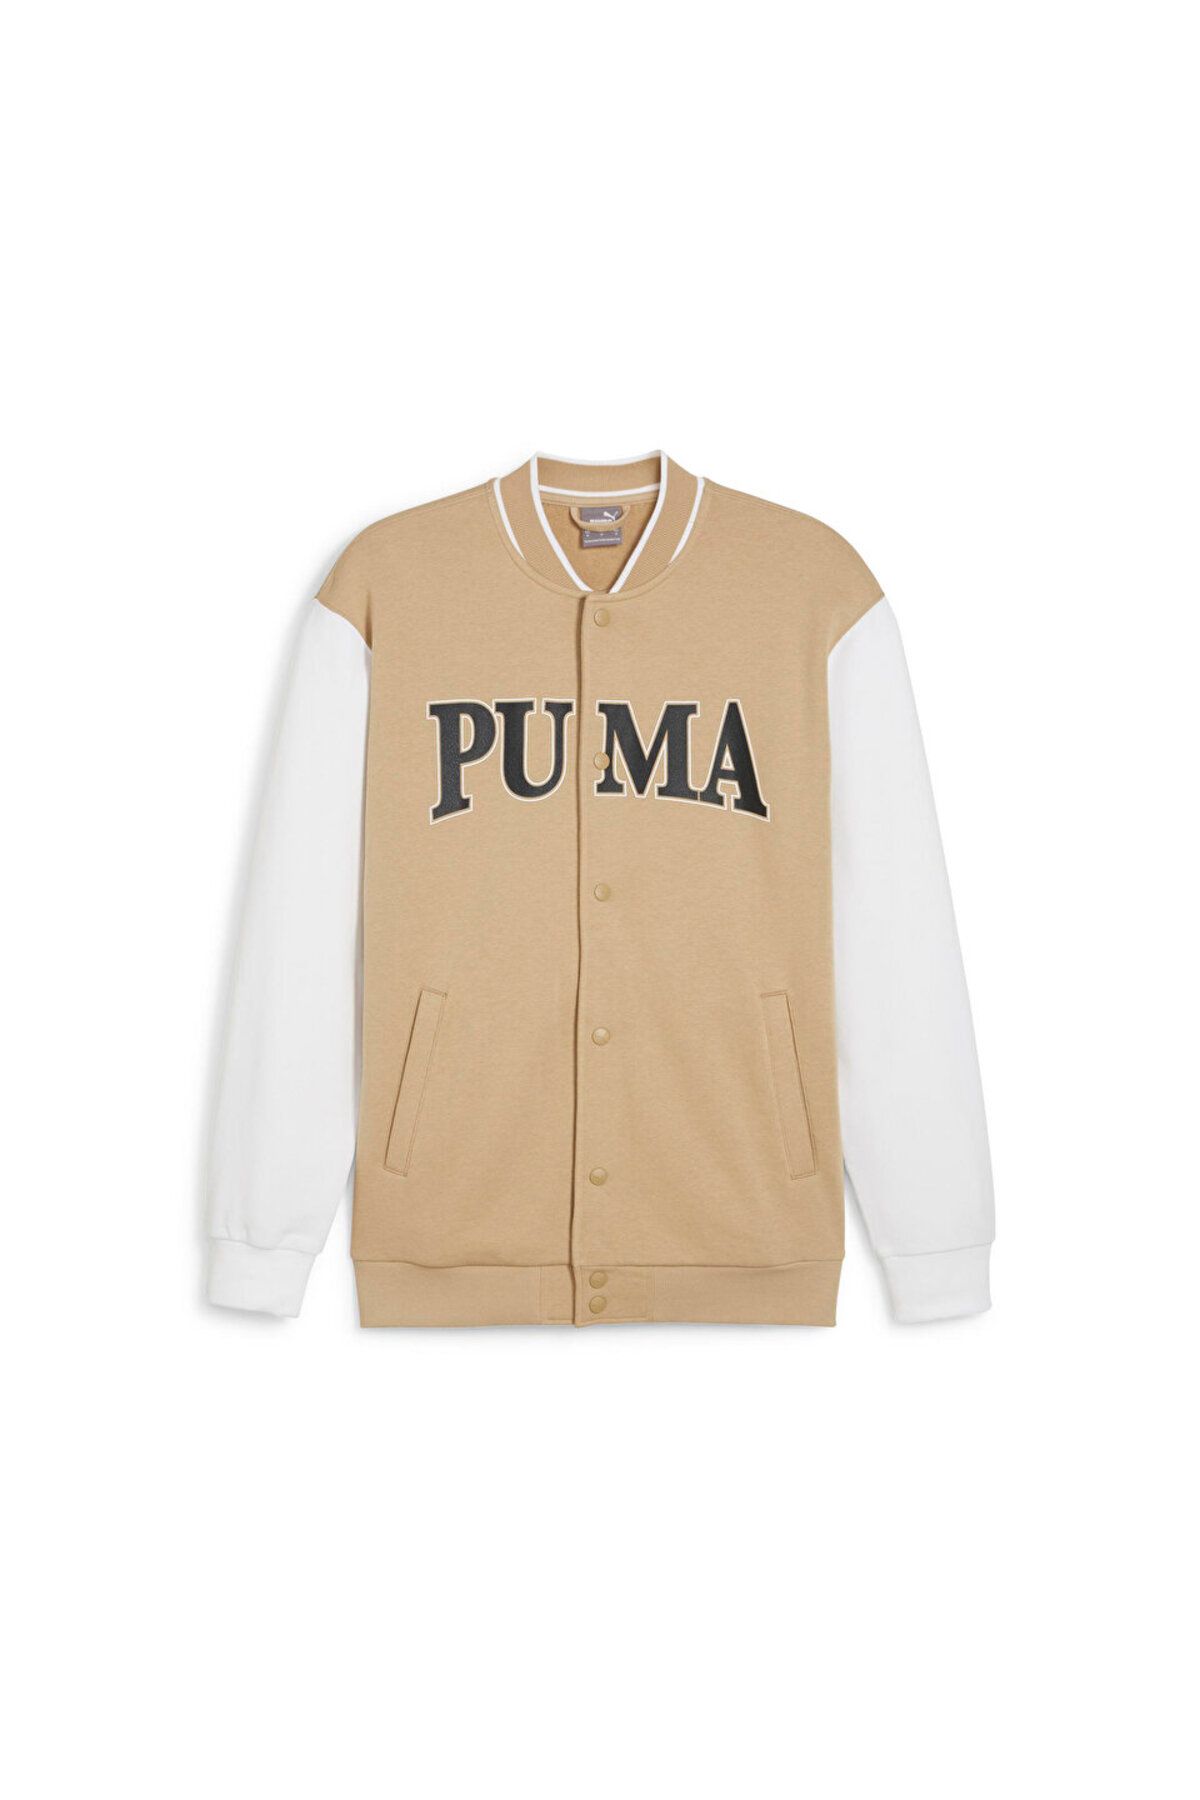 Puma Squad Track Jacket Erkek Günlük Ceket 67897183 Krem